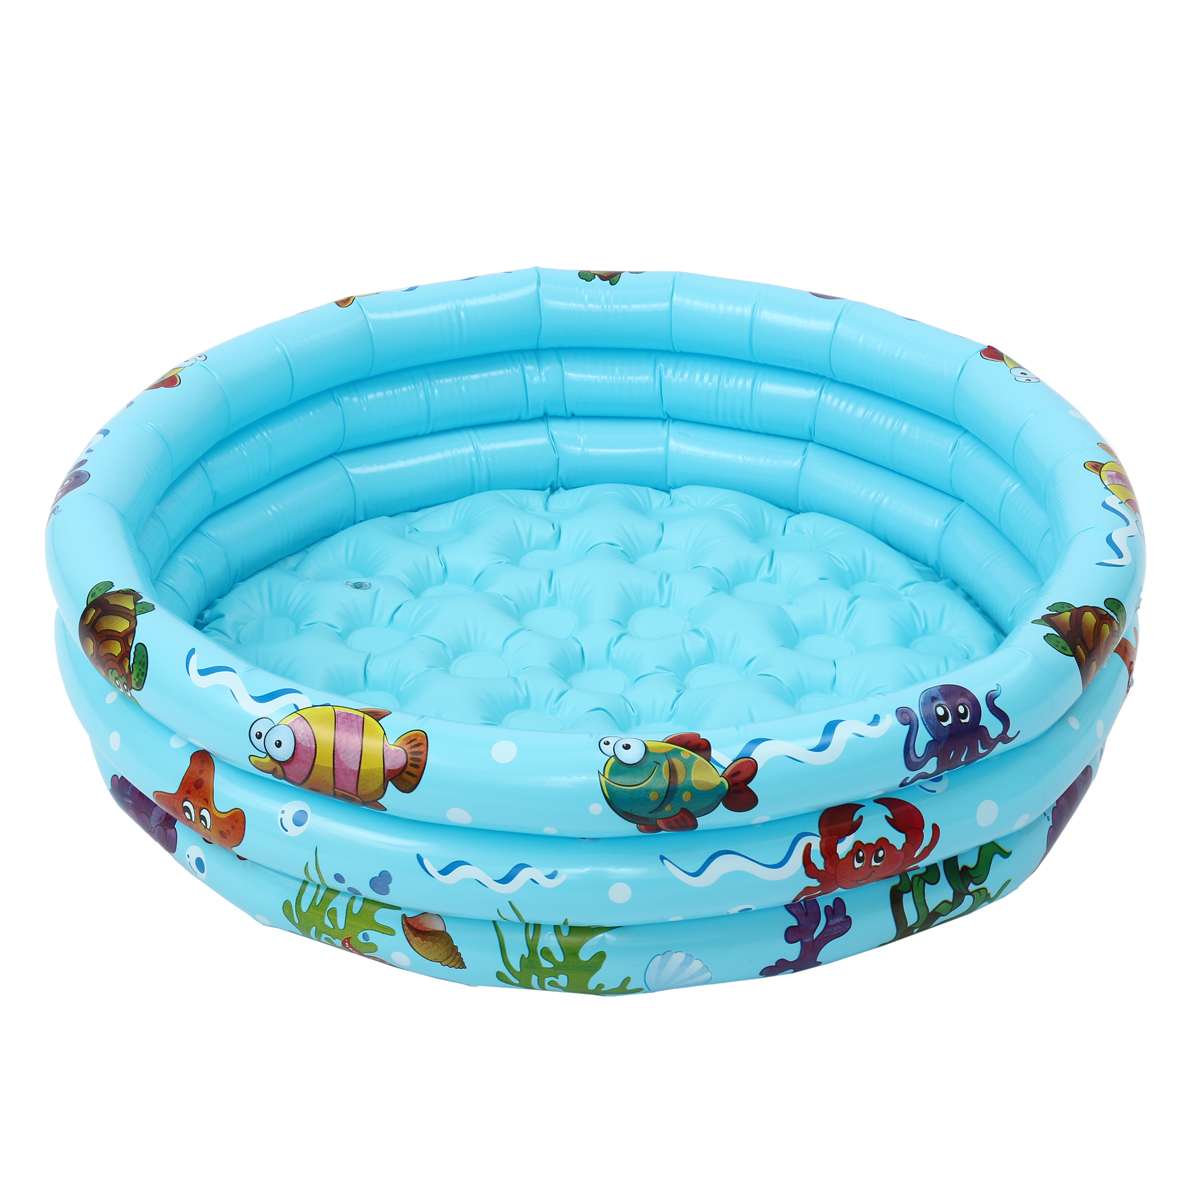 90 x 25cm oppustelig baby swimmingpool piscina bærbar udendørs børnebassin badekar børnepool baby swimmingpool vandkar: Blå